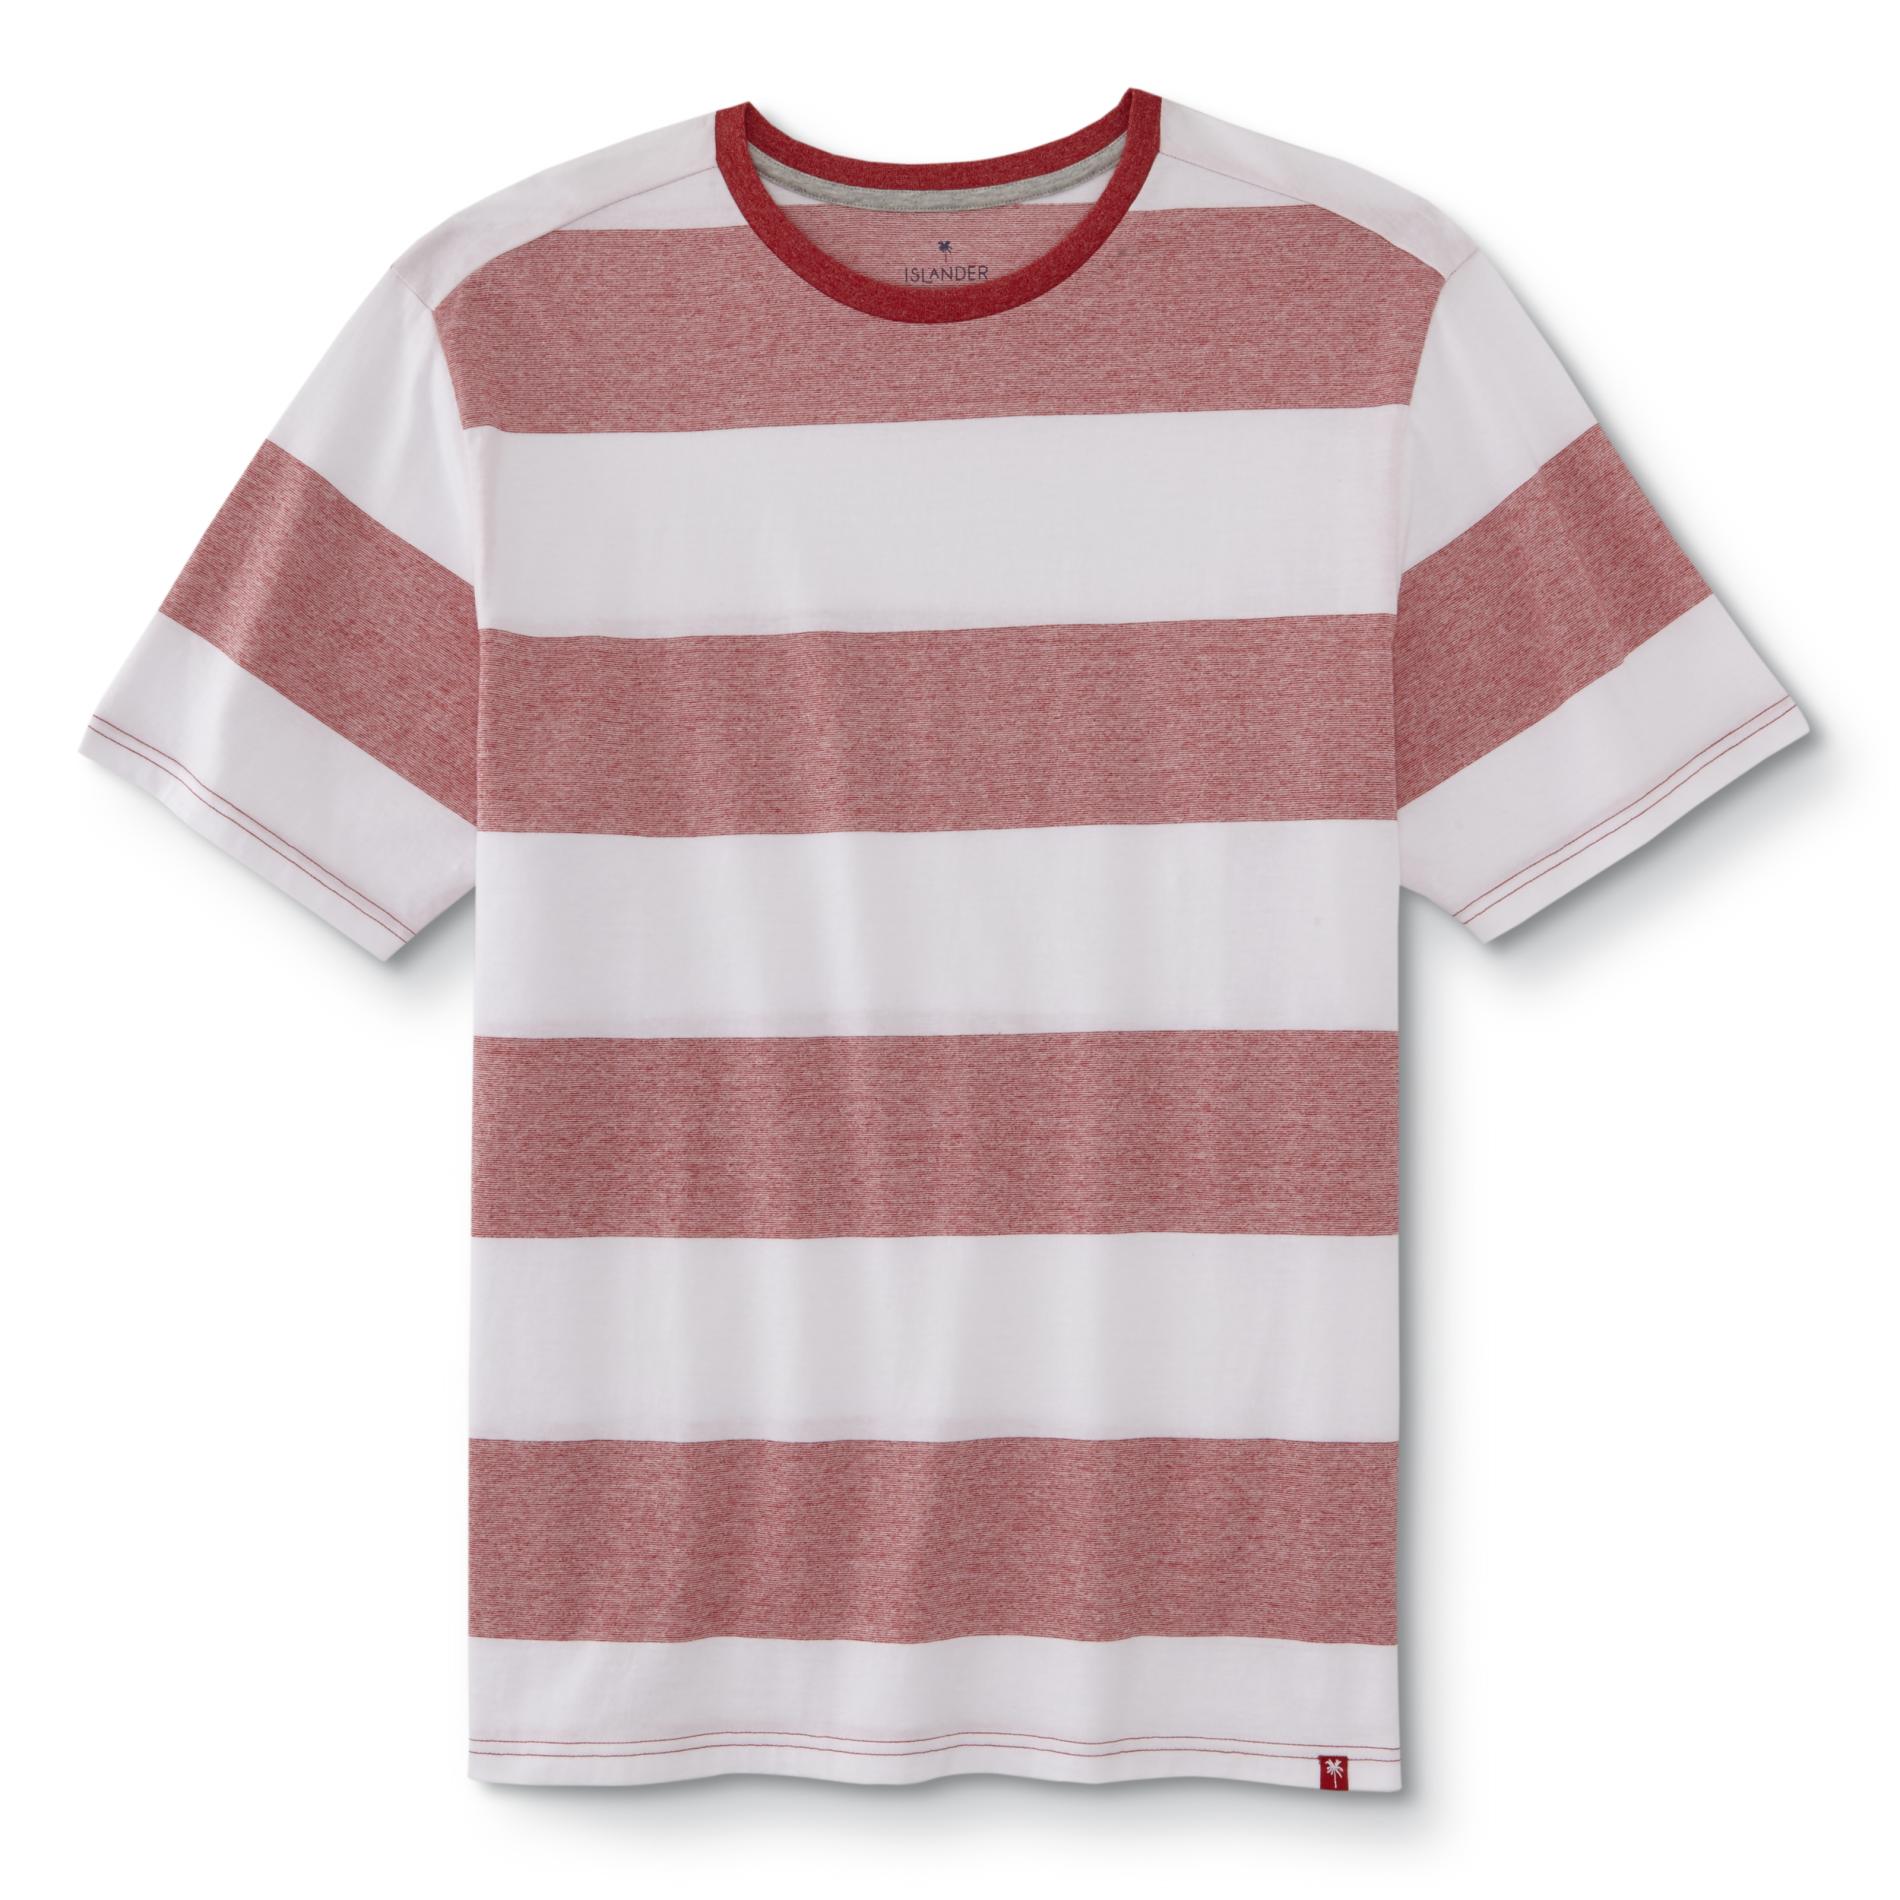 Islander Men's T-Shirt - Rugby Striped